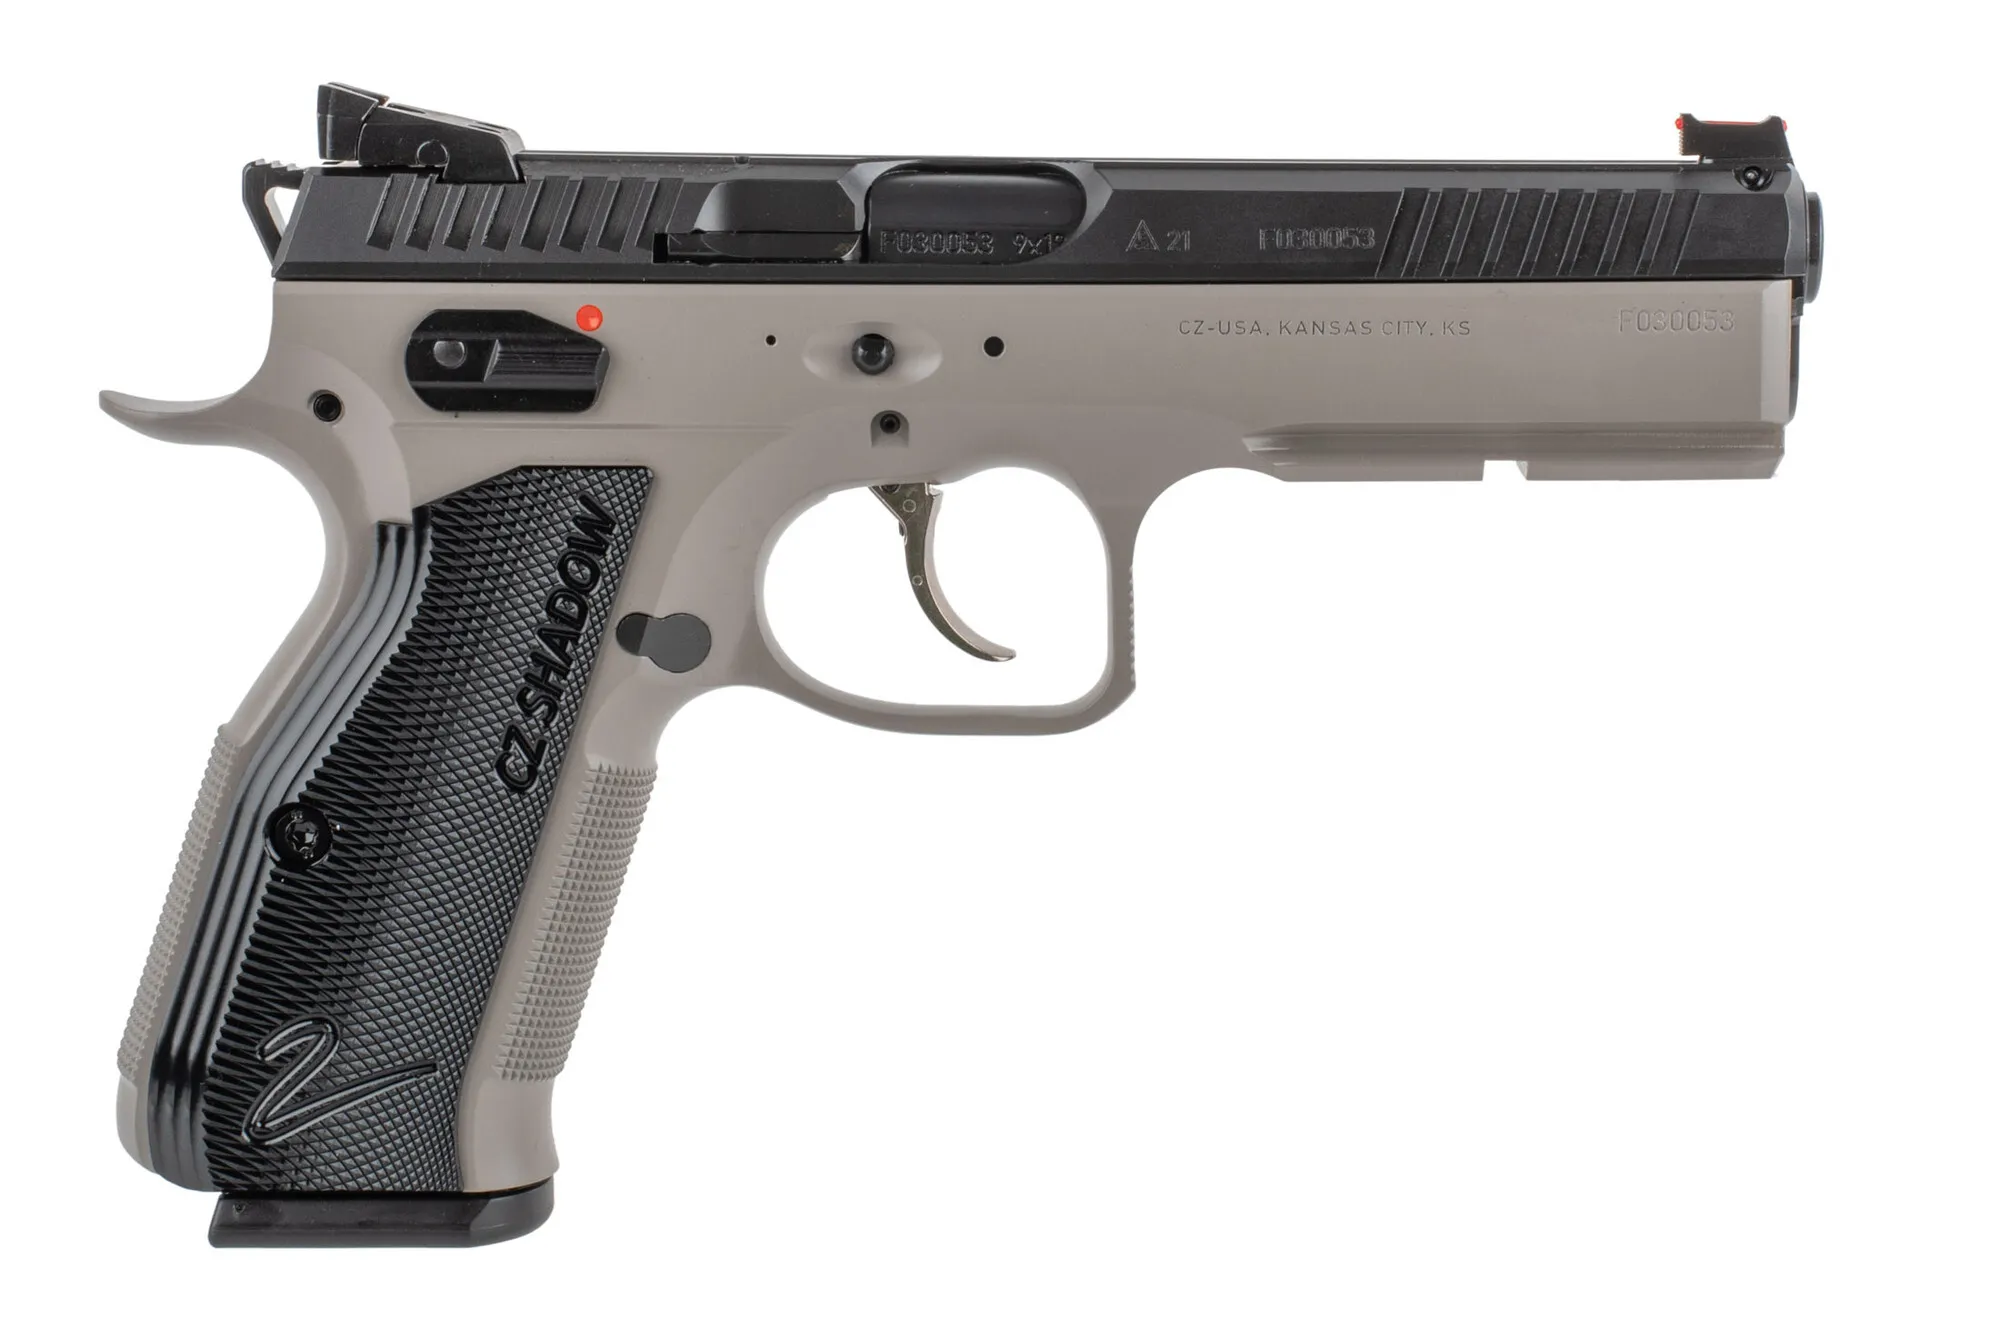 CZ Shadow 2 9mm pistol on white background